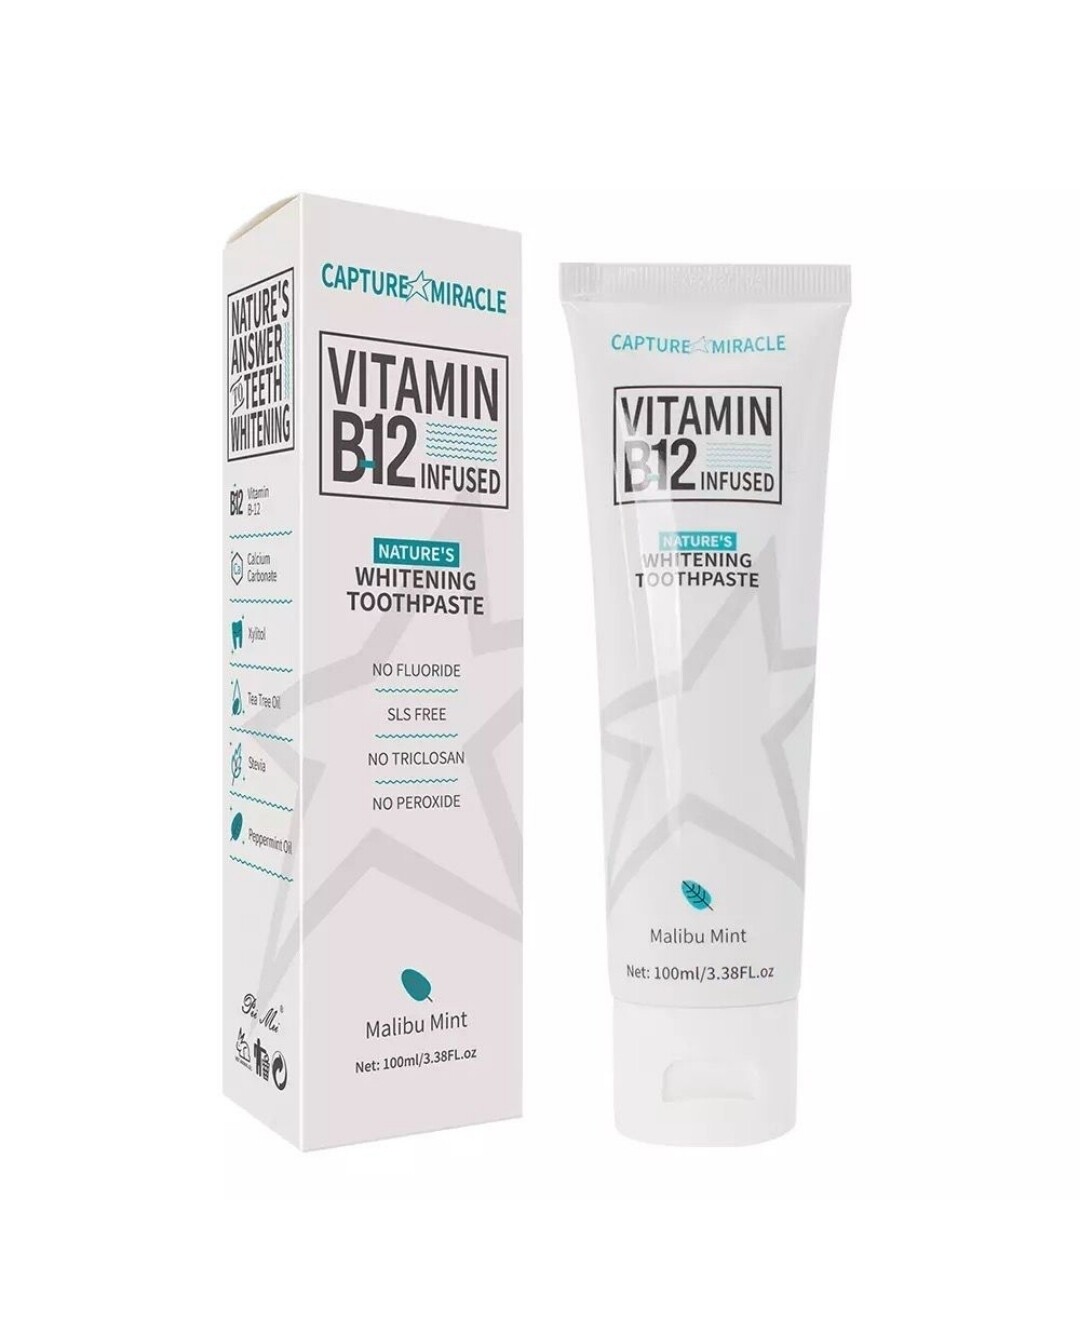 Vitamin B12 Whitening Toothpaste